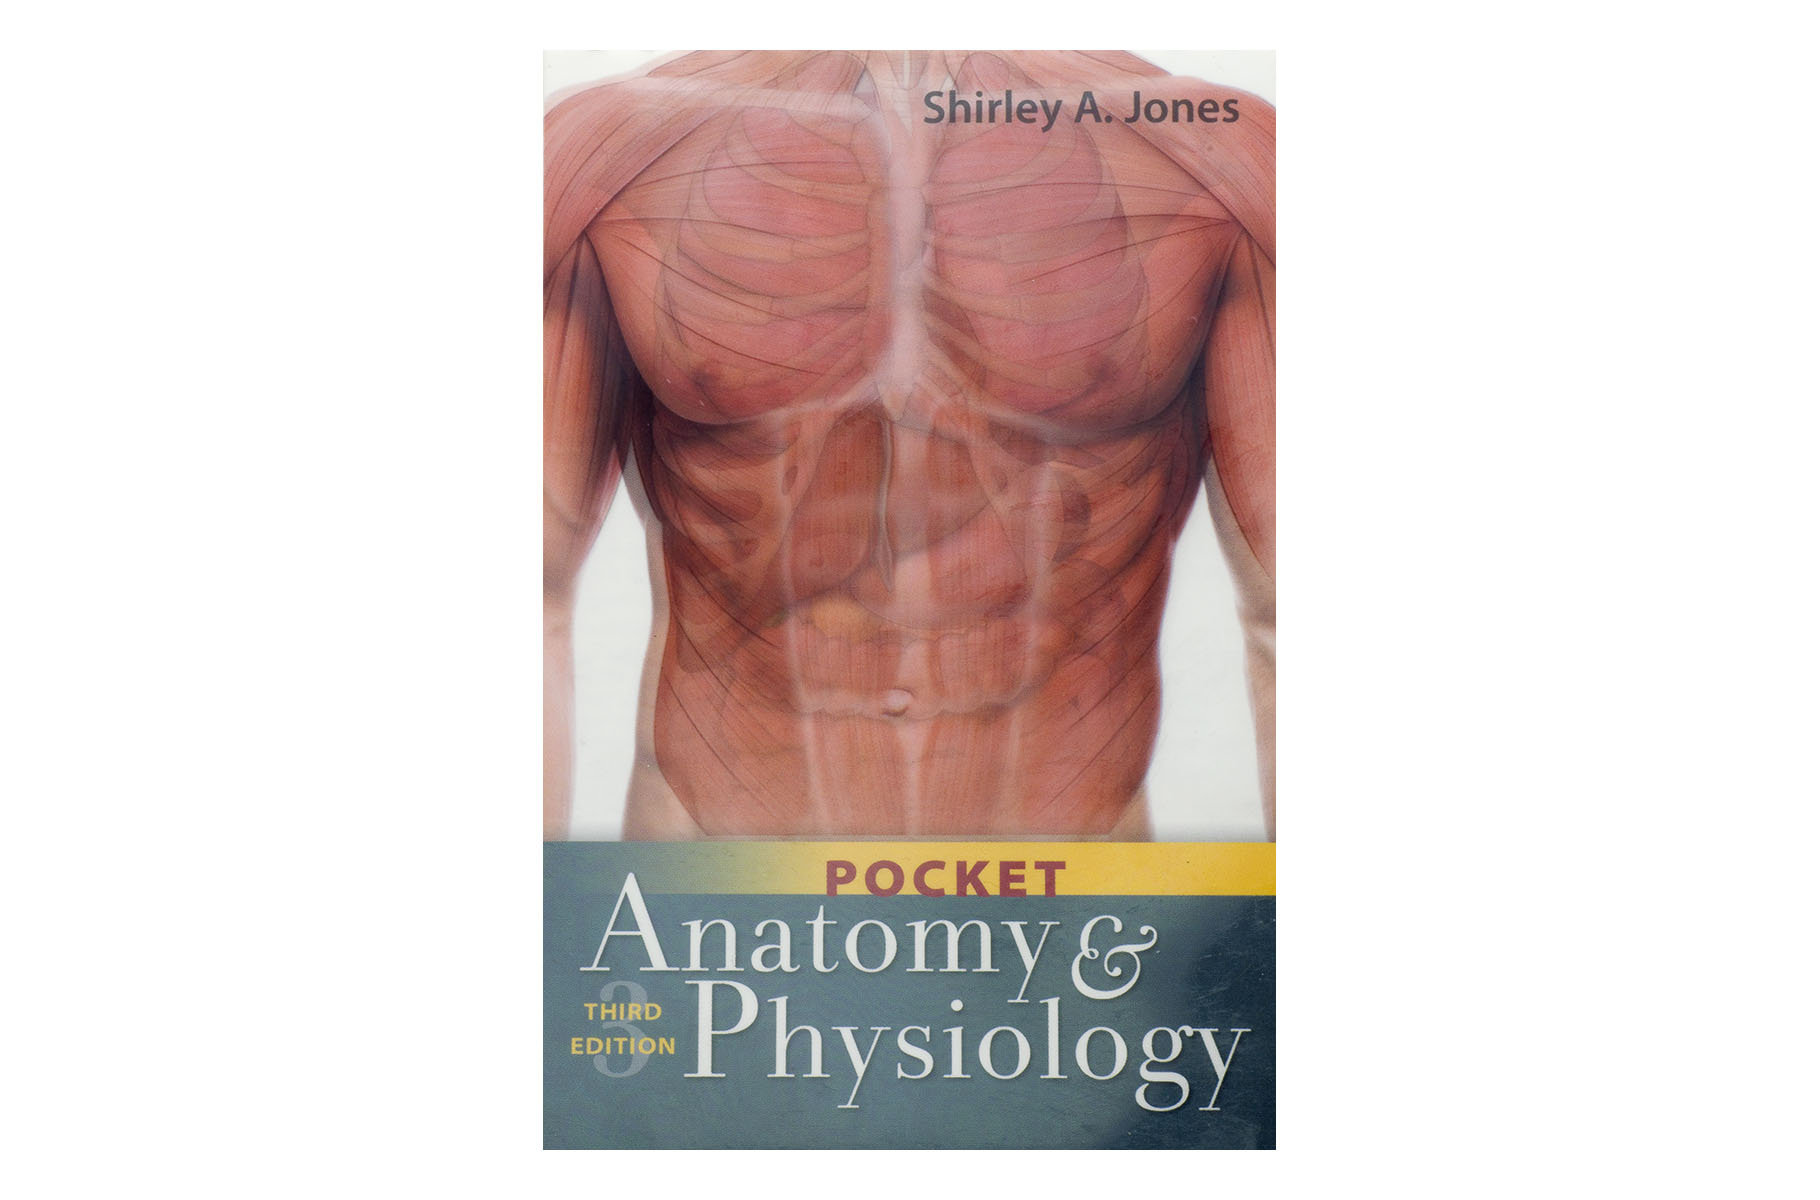 Anatomy & Physiology Pocket book